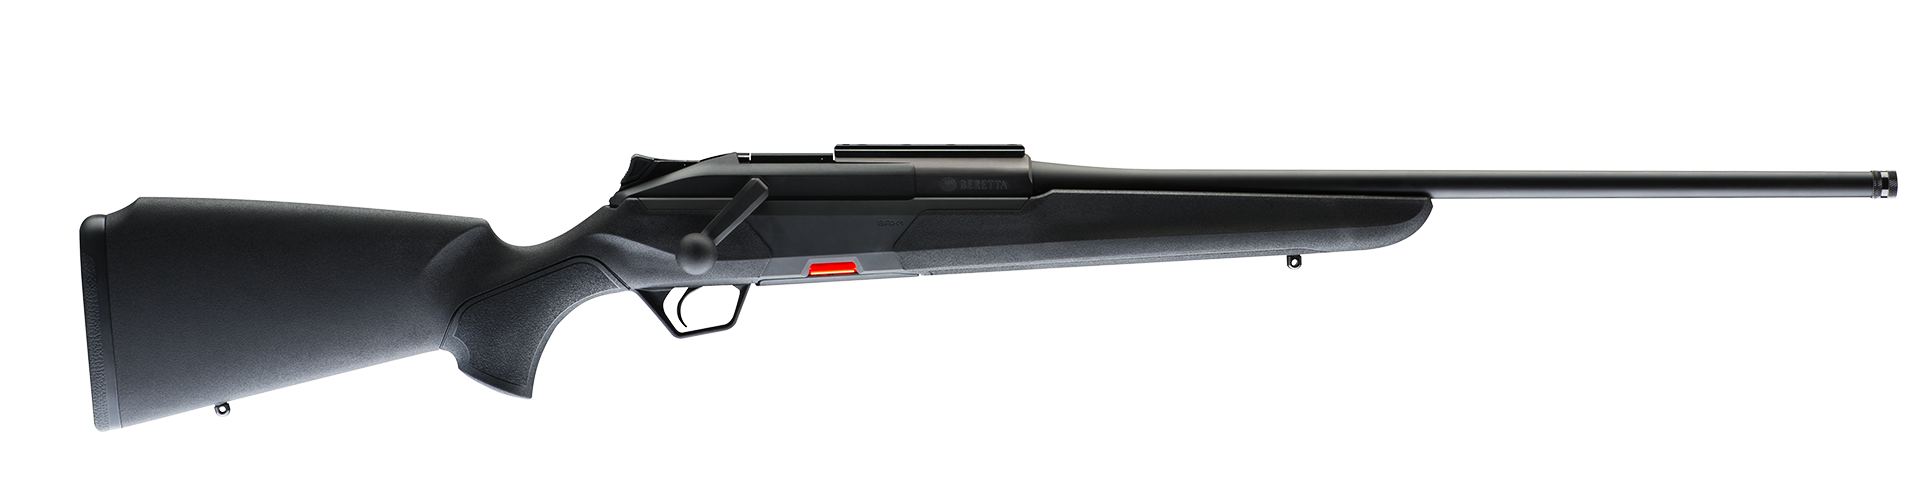 BRX1 Straight Bolt Hunting Rifle